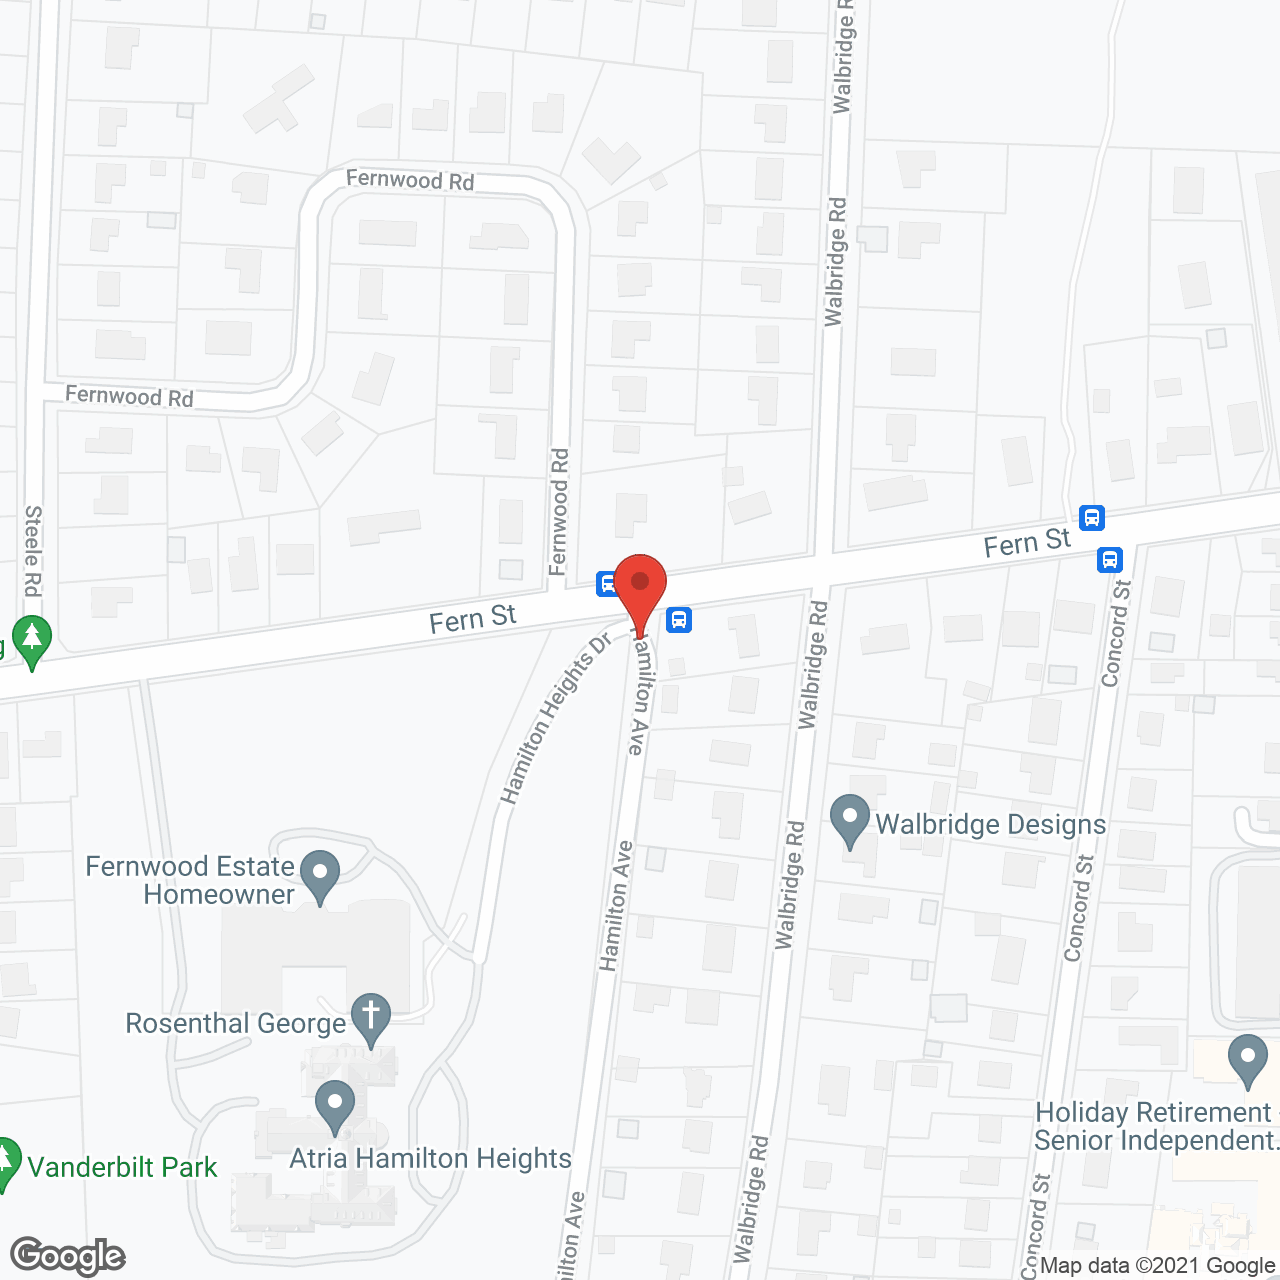 Aviva West Hartford in google map